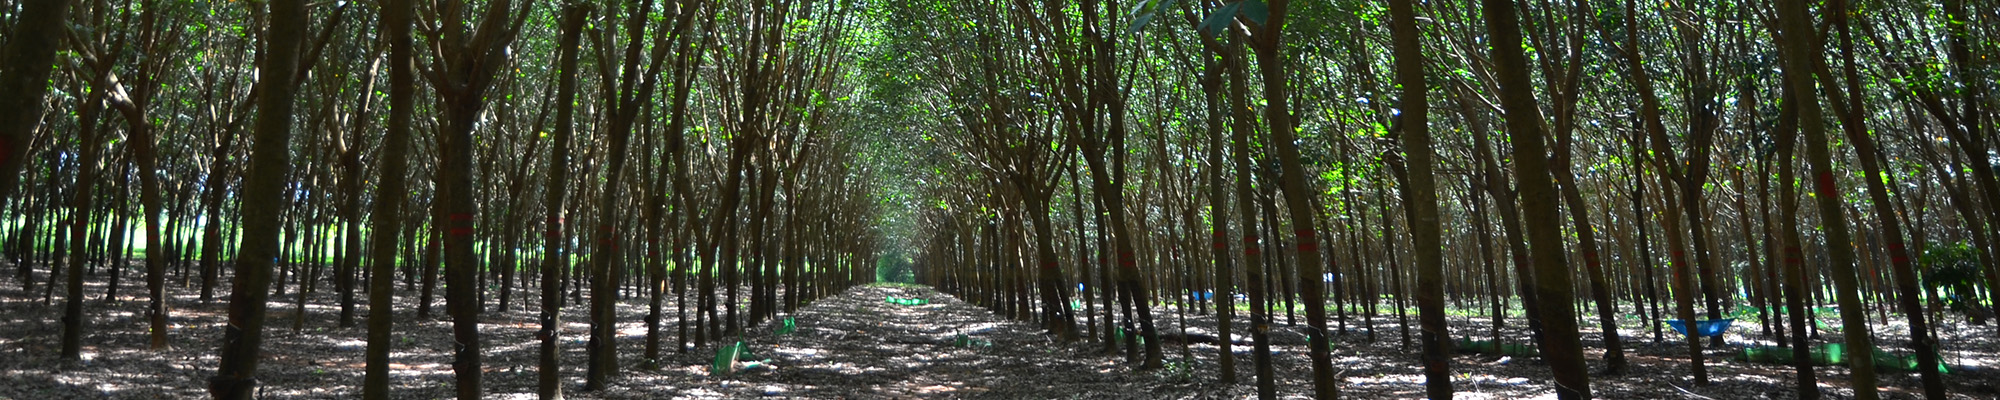 Rubber tree plantation, Chanthaburi,Thailand (C.Bottier)